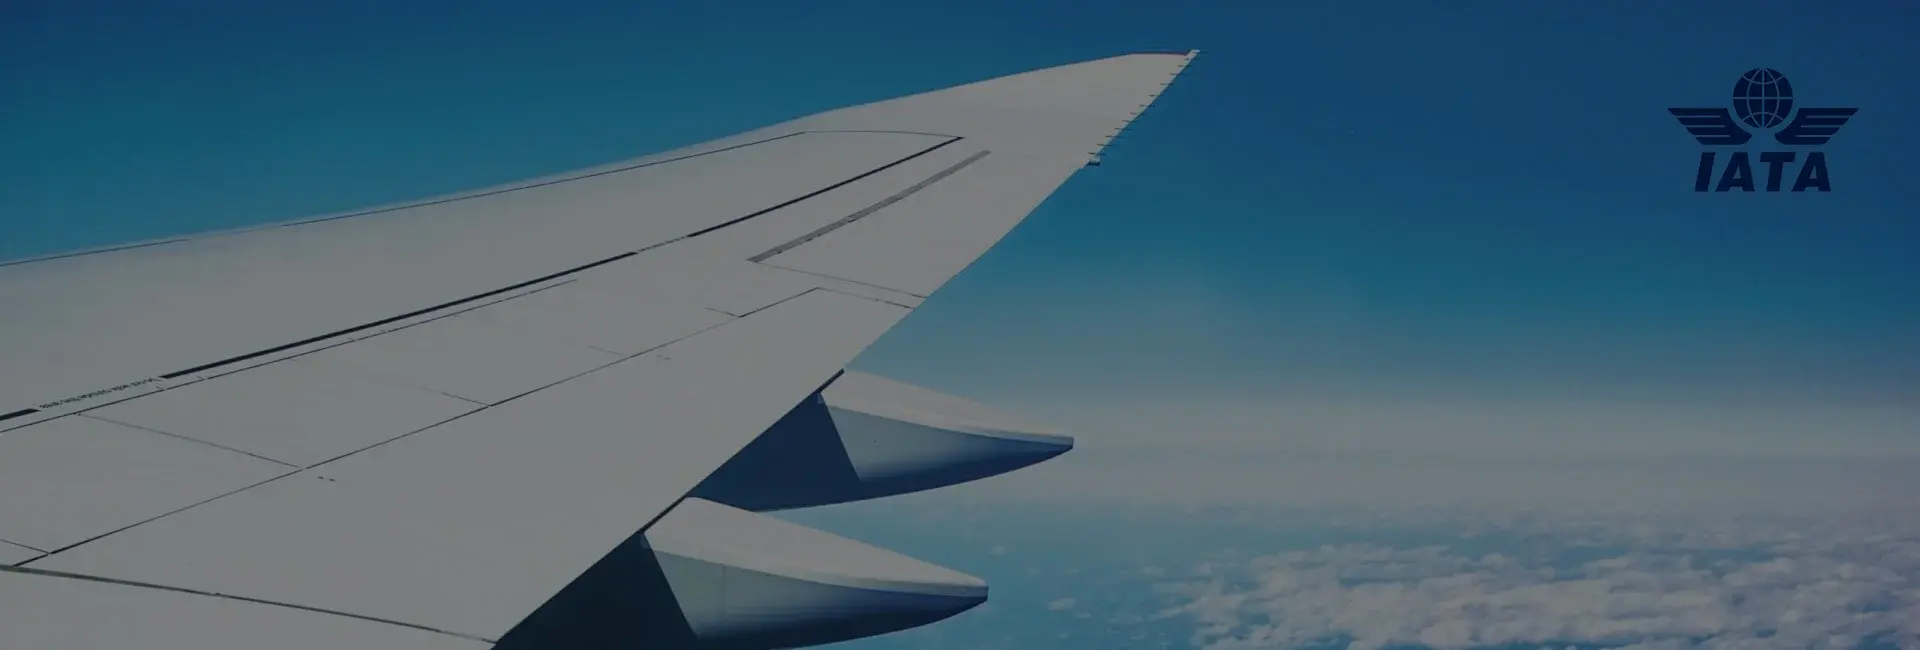 IATA Expands Turbulence Aware Platform - ISS Relocations